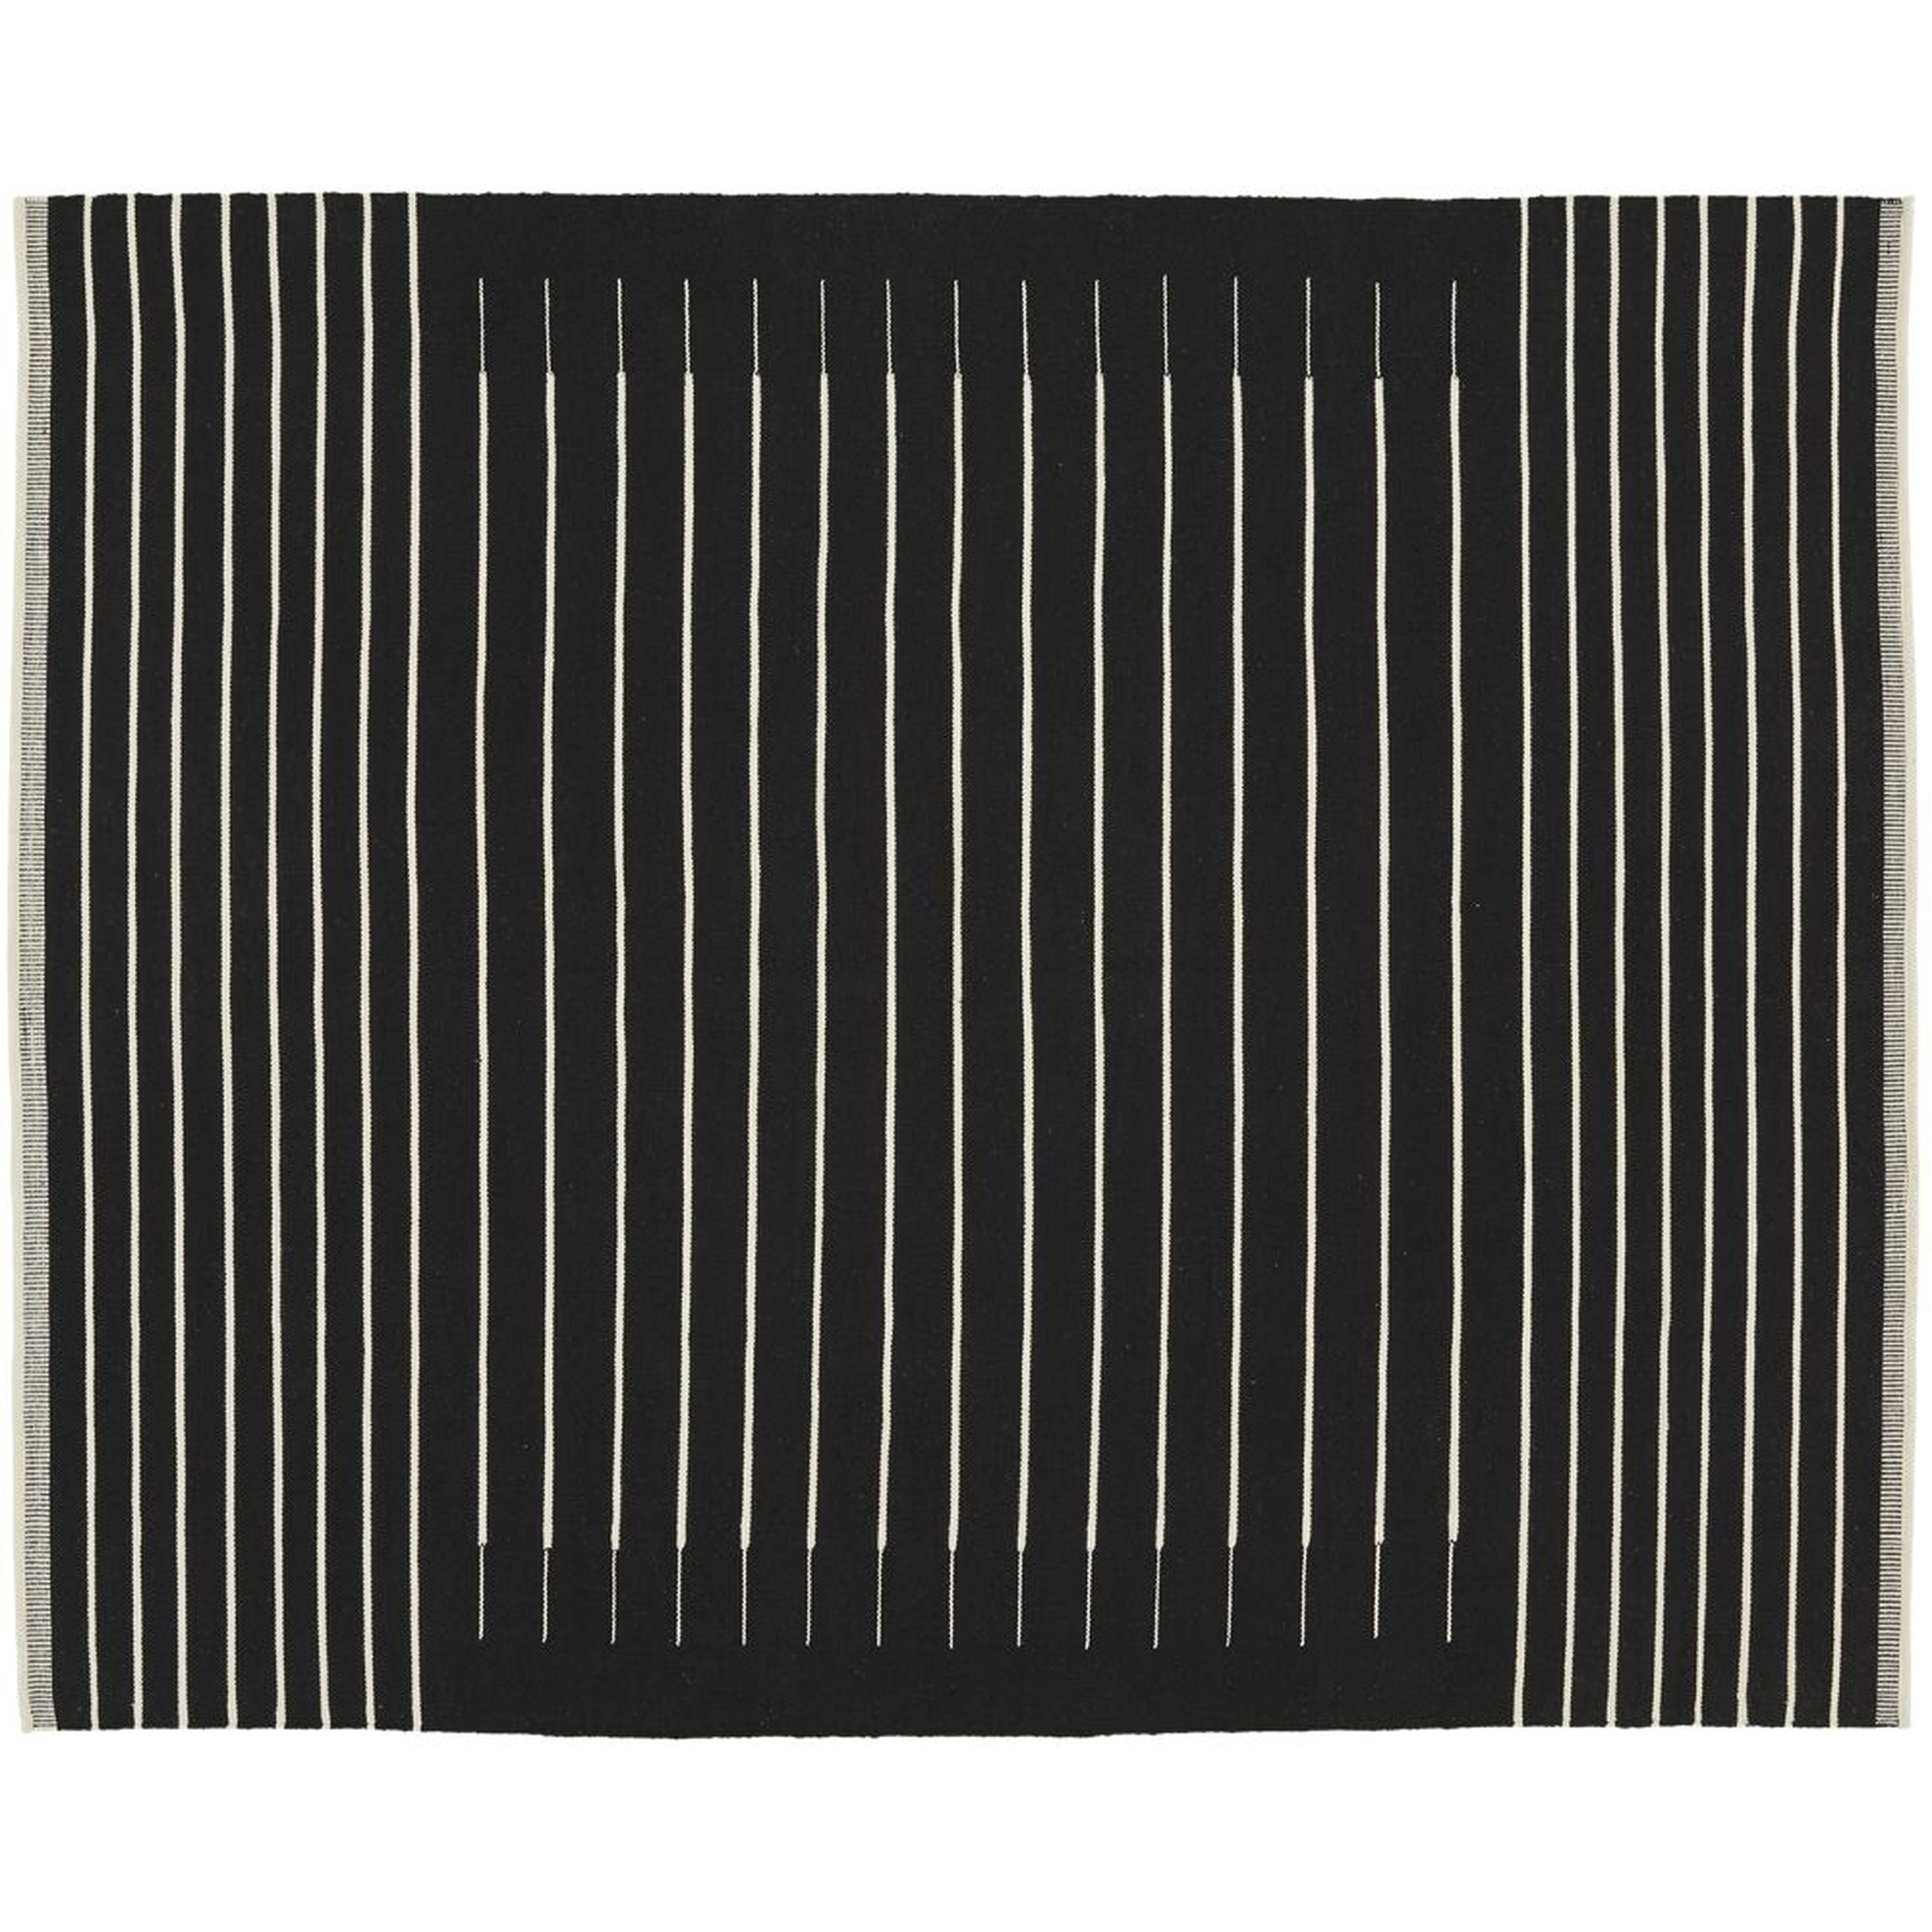 Black with White Stripe Rug 8'x10' RESTOCK Early April 2022 - CB2